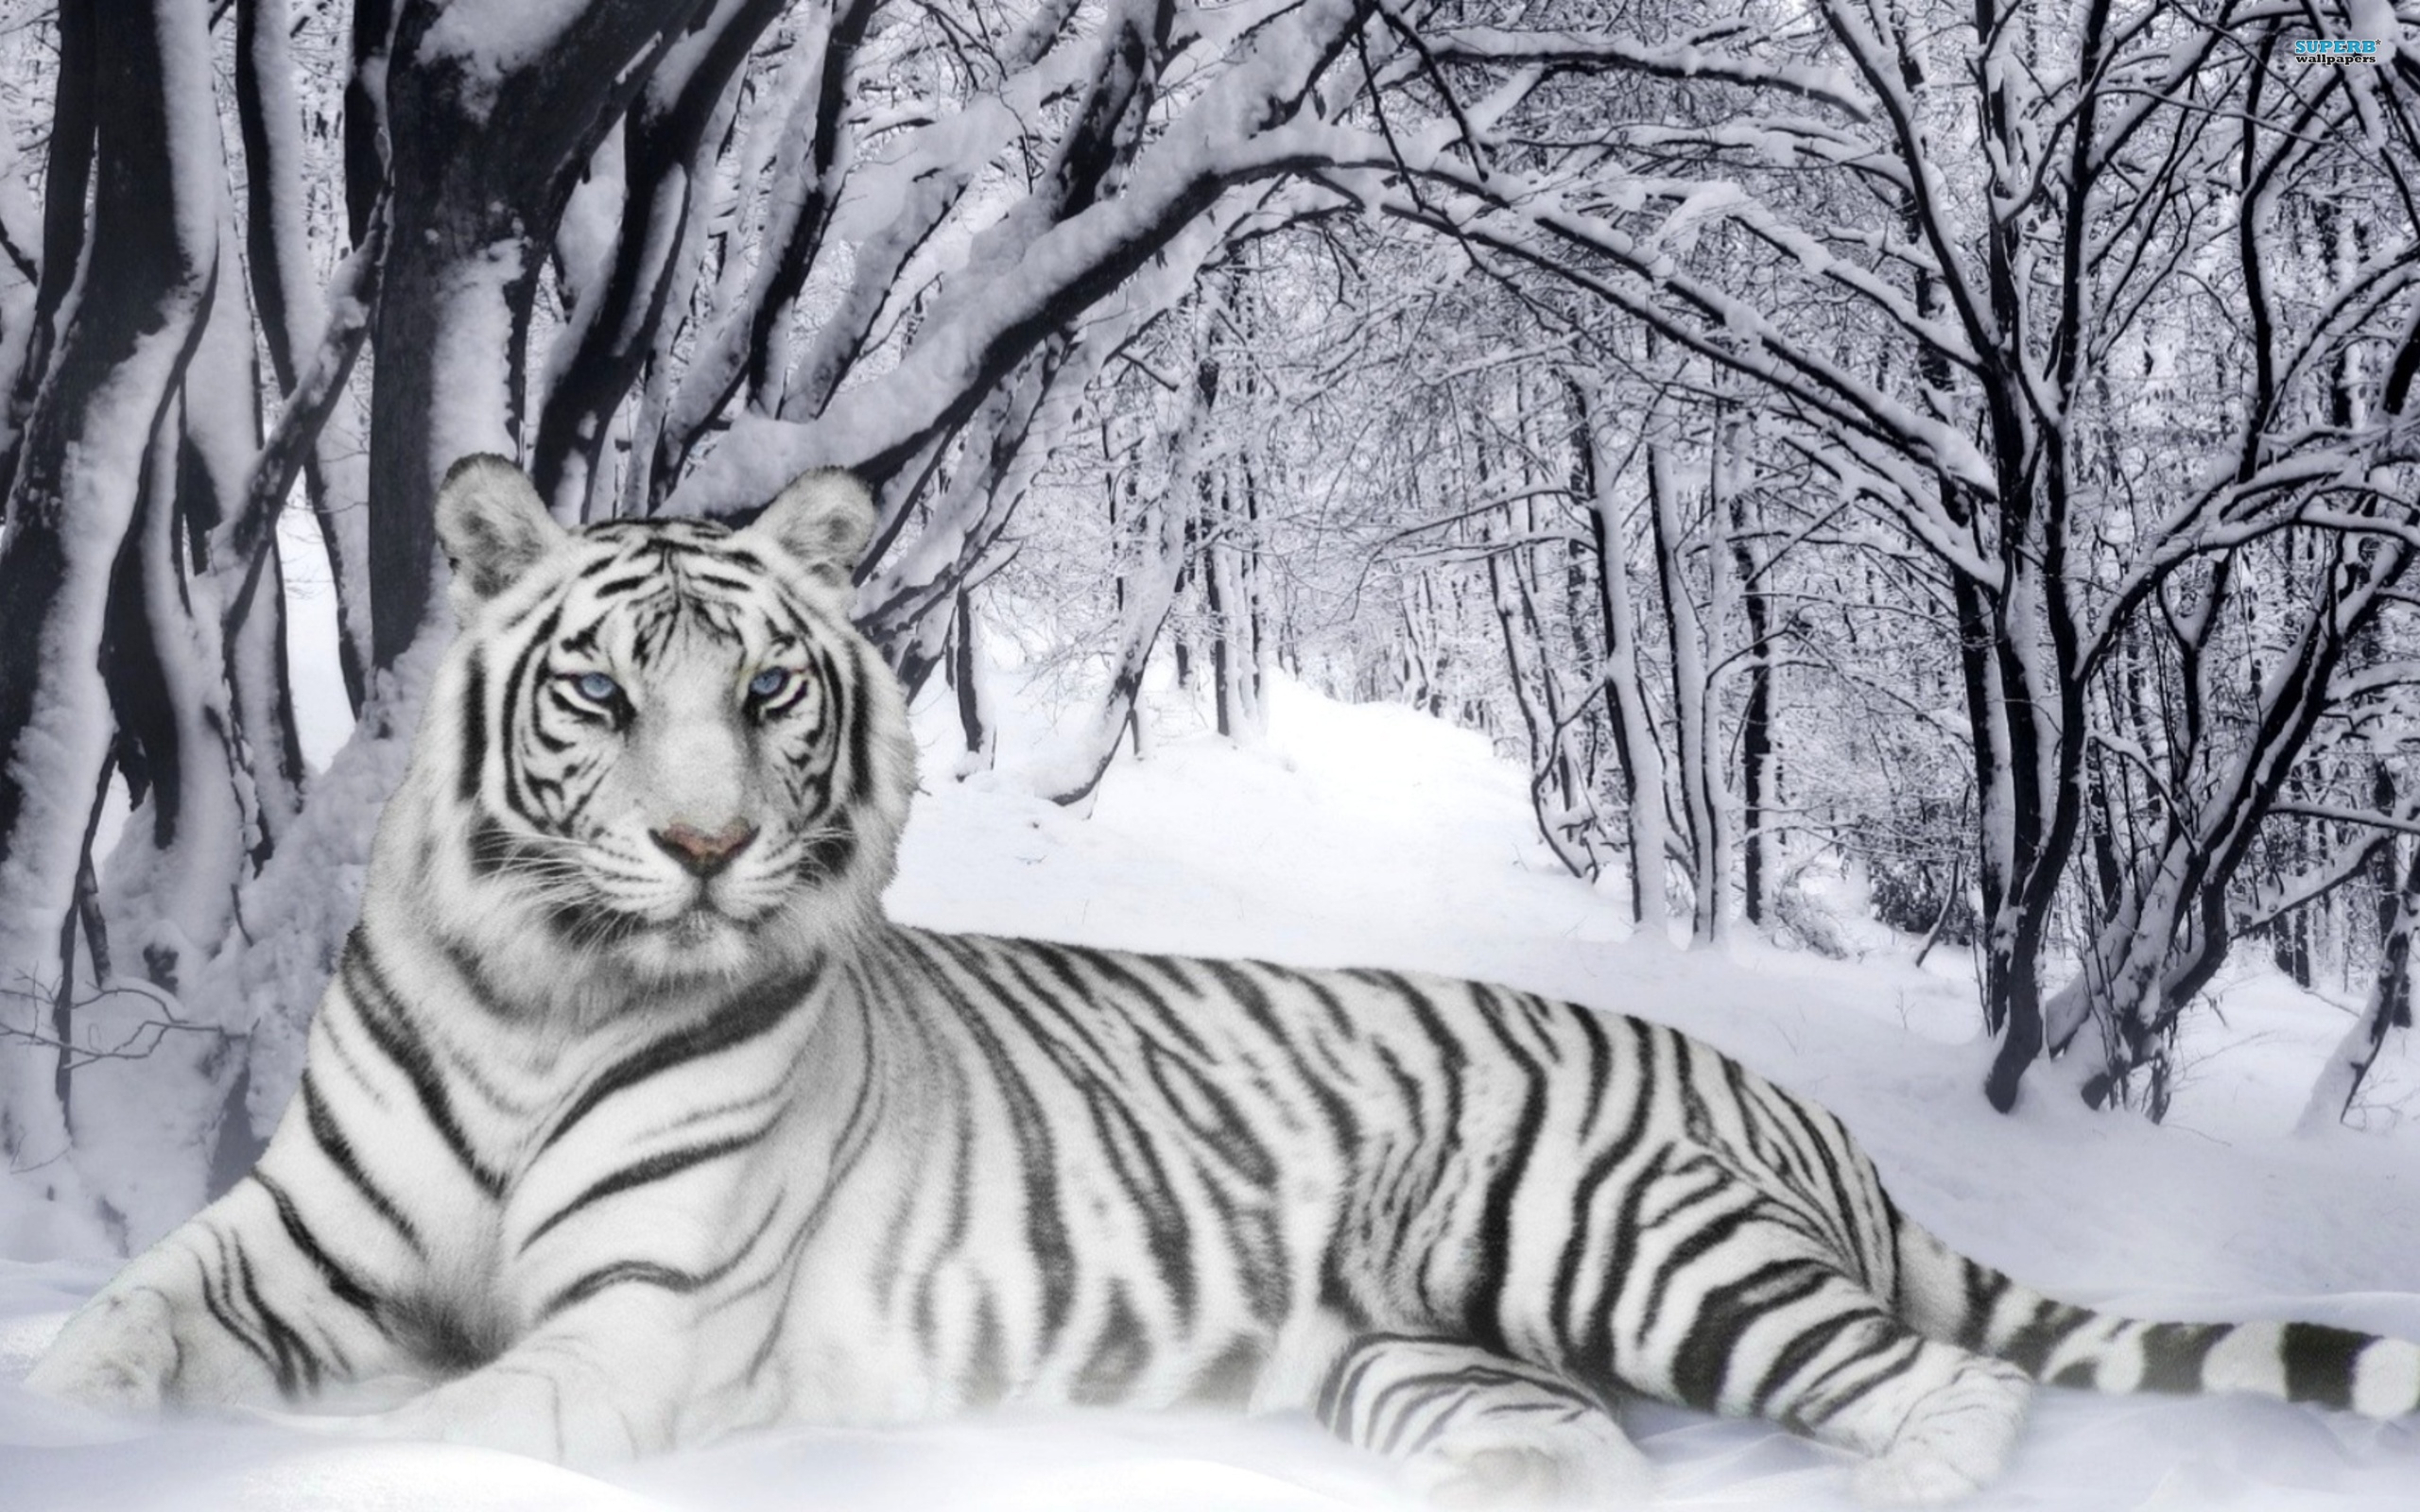 White tiger photo gallery